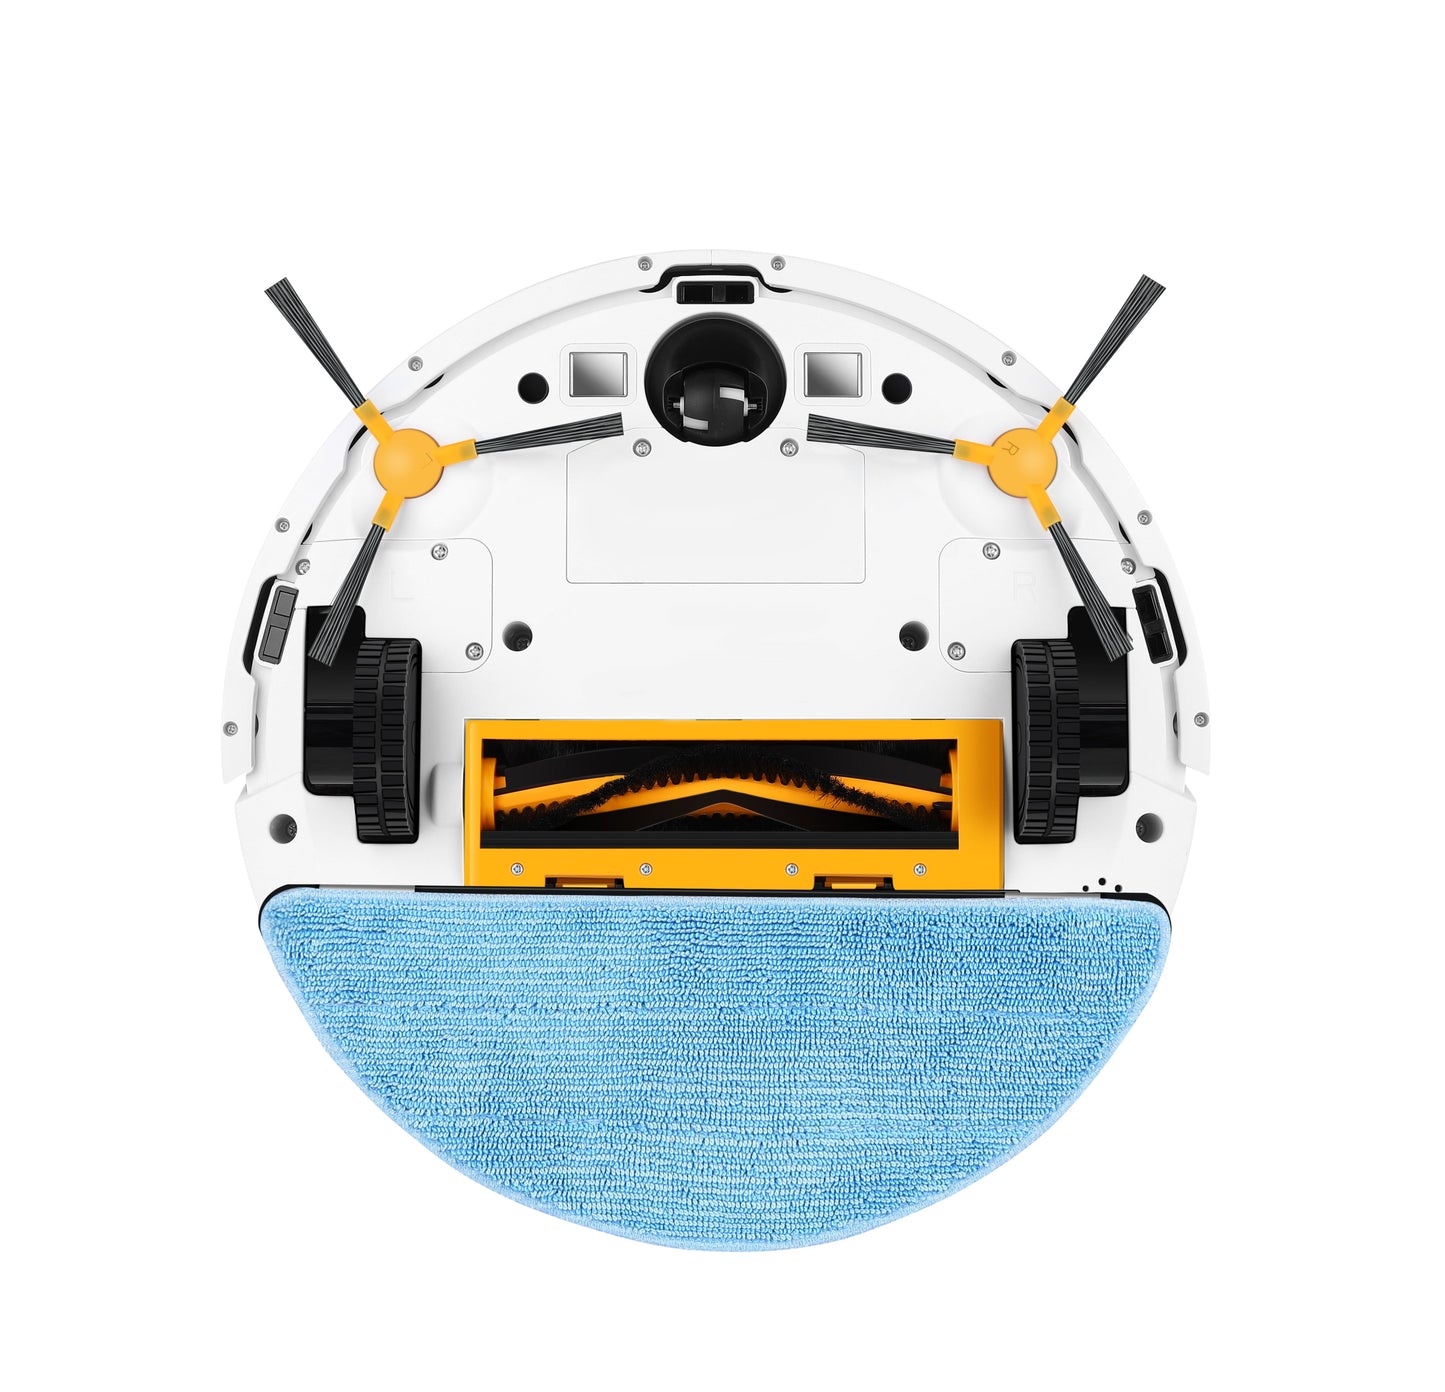 ONSON Robo Aspirateur Aspiradora Aspirador Staubsauger Smart Floor Mopping Sweeping Cleaning Robot Vacuum Cleaner baby magazin 